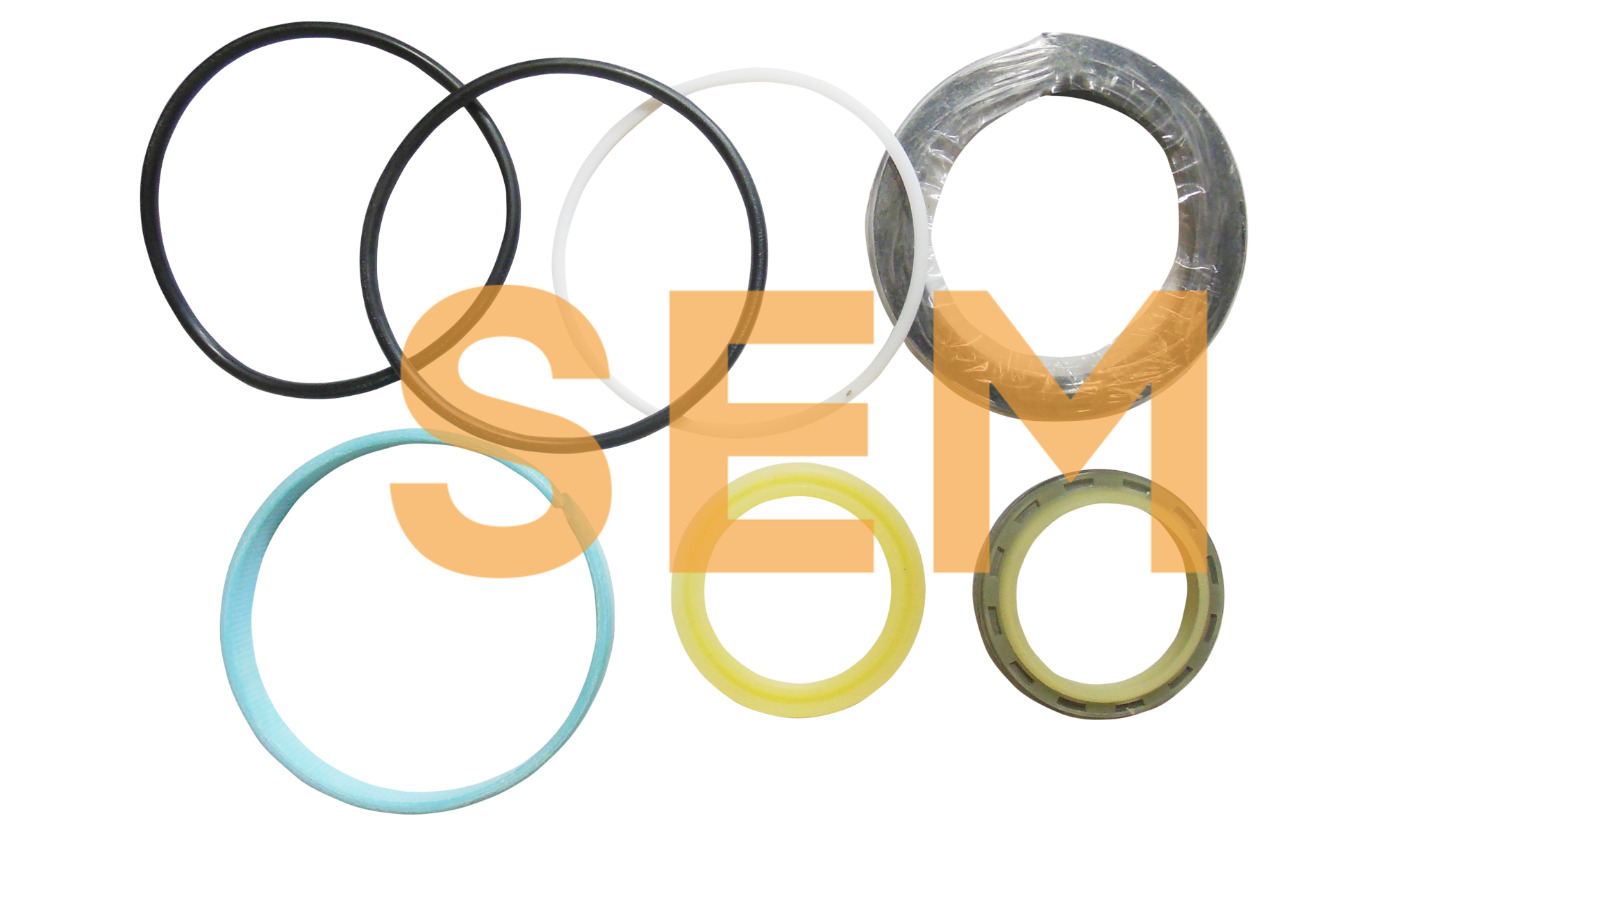 SEM 101-63-02010 Komatsu Replacement Hydraulic Cylinder Seal kit fits D20A-7, D2